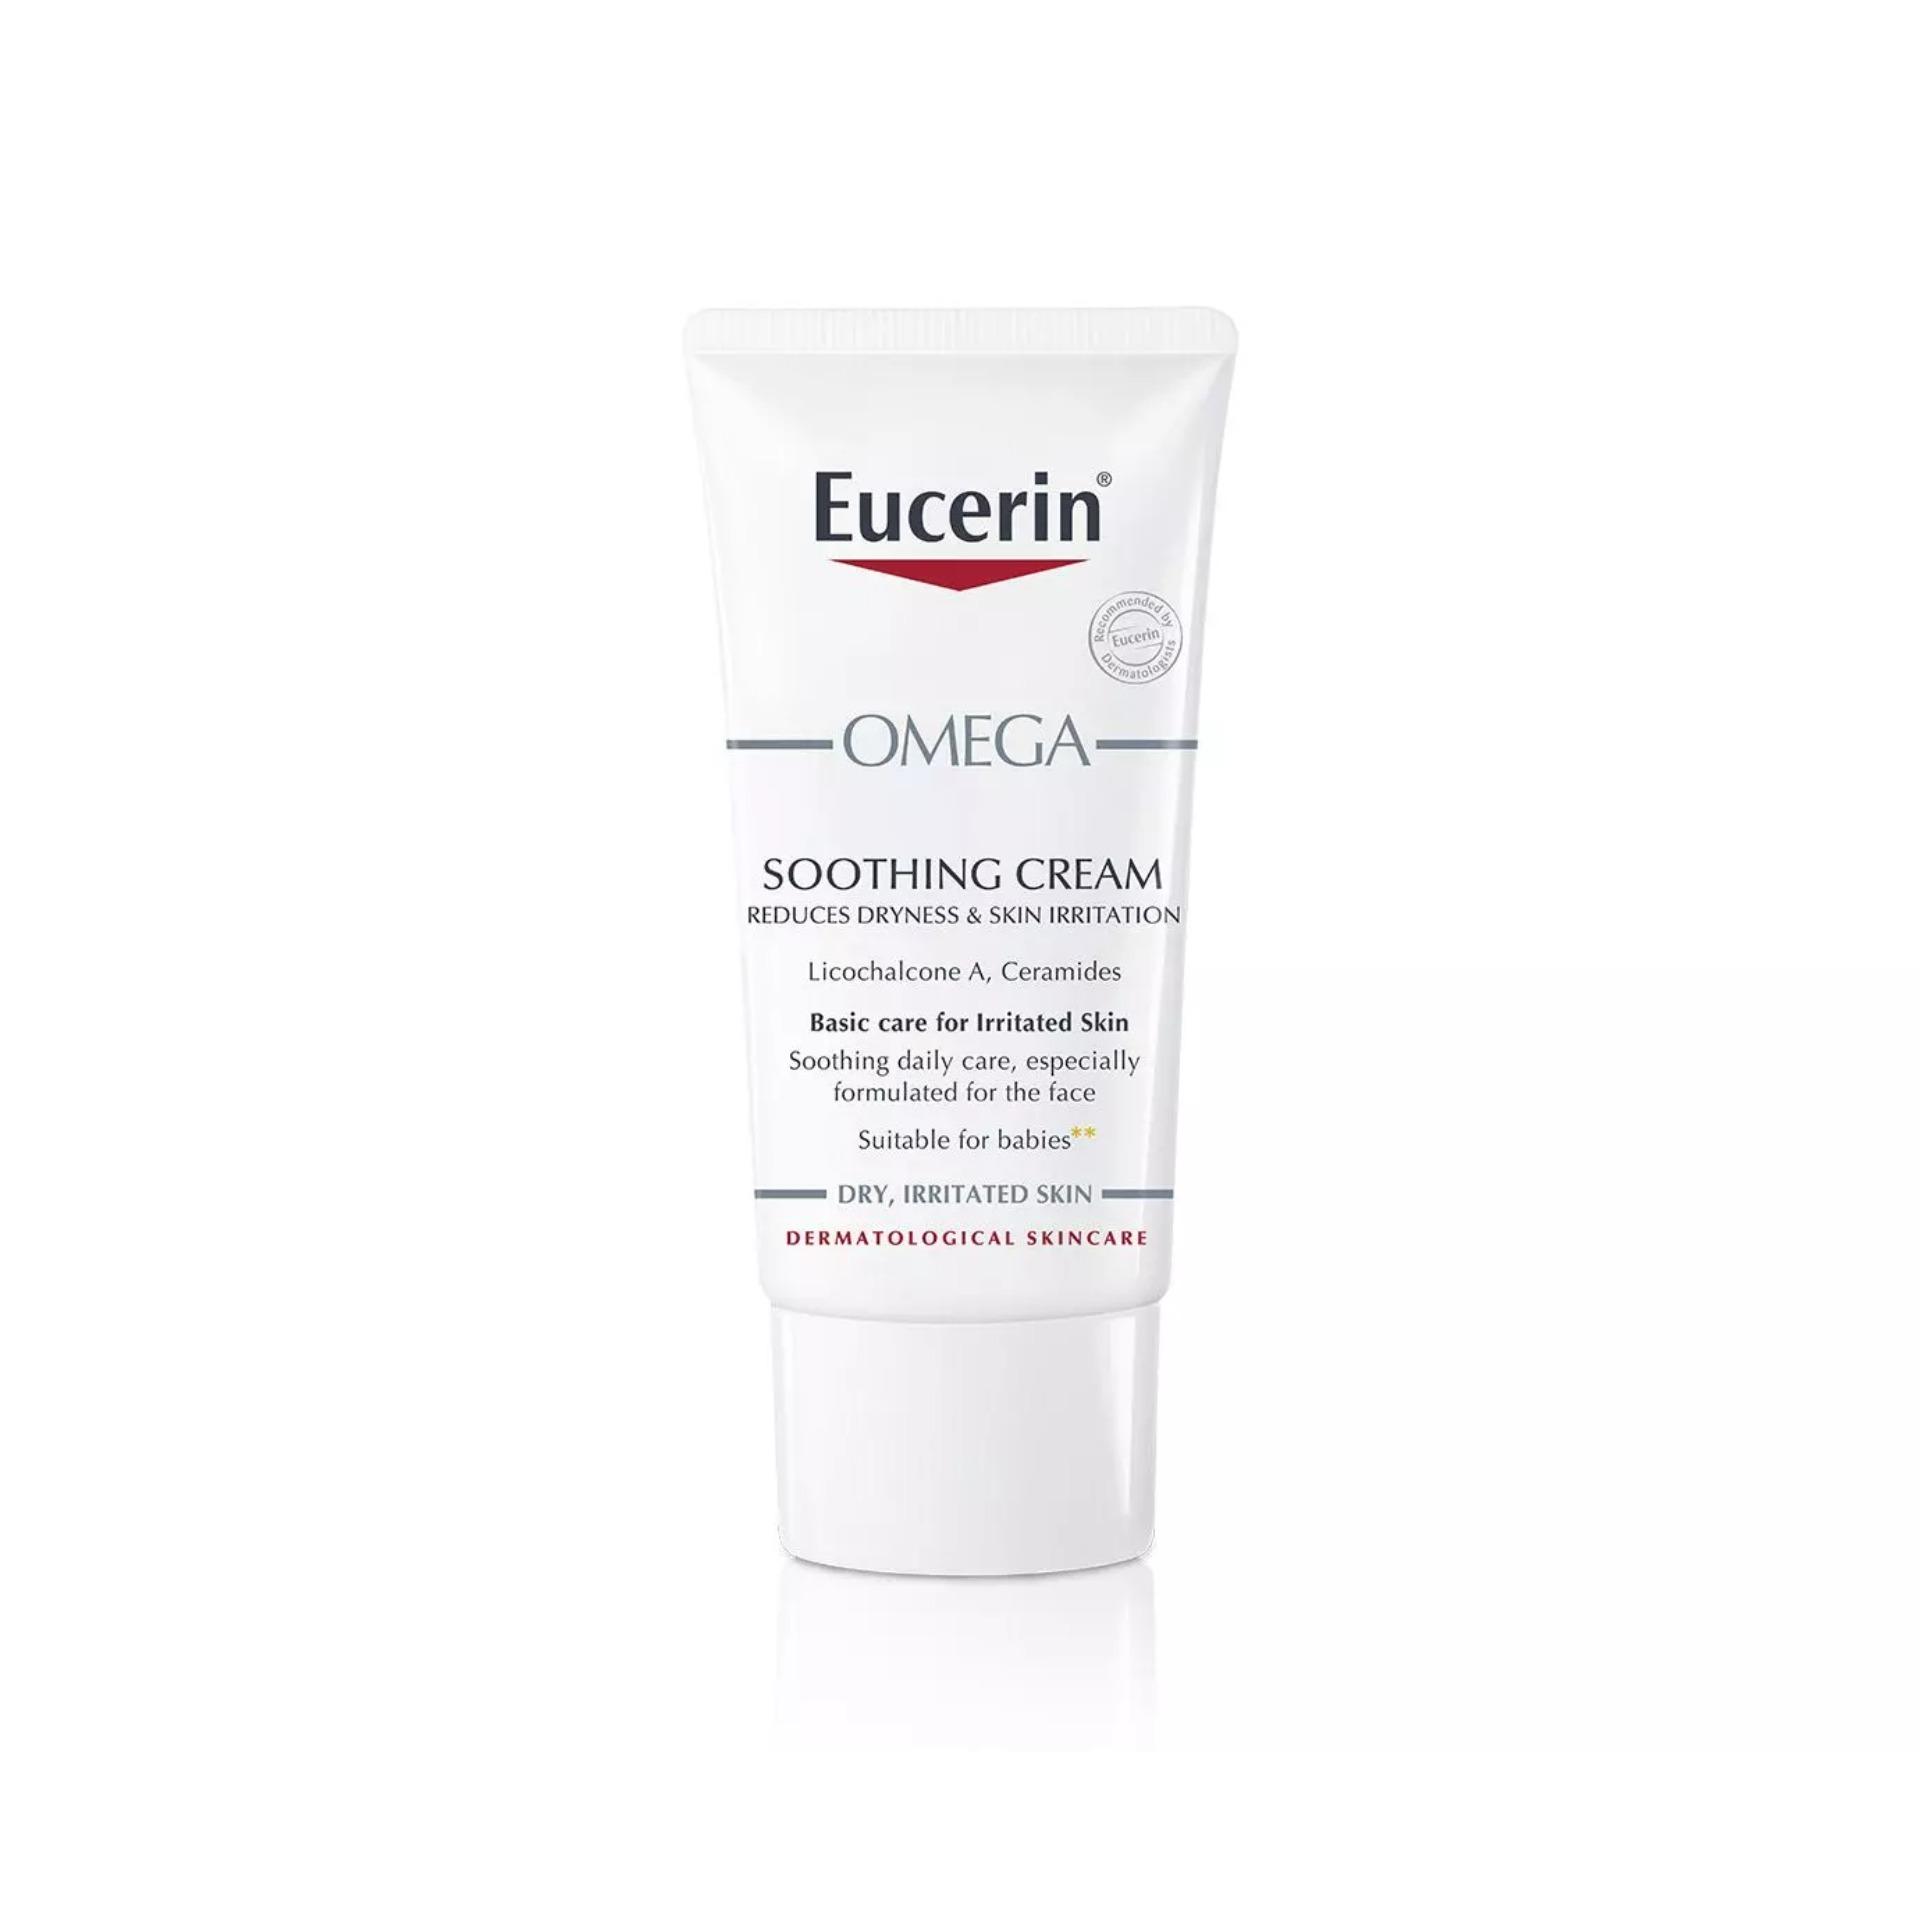 Eucerin AtoControl Omega Soothing Cream 12% ผิวอักเสบ แห้ง แดงและคัน ผื่นภูมิแพ้ ceremide +LICOCHALCONE A 50 ml.